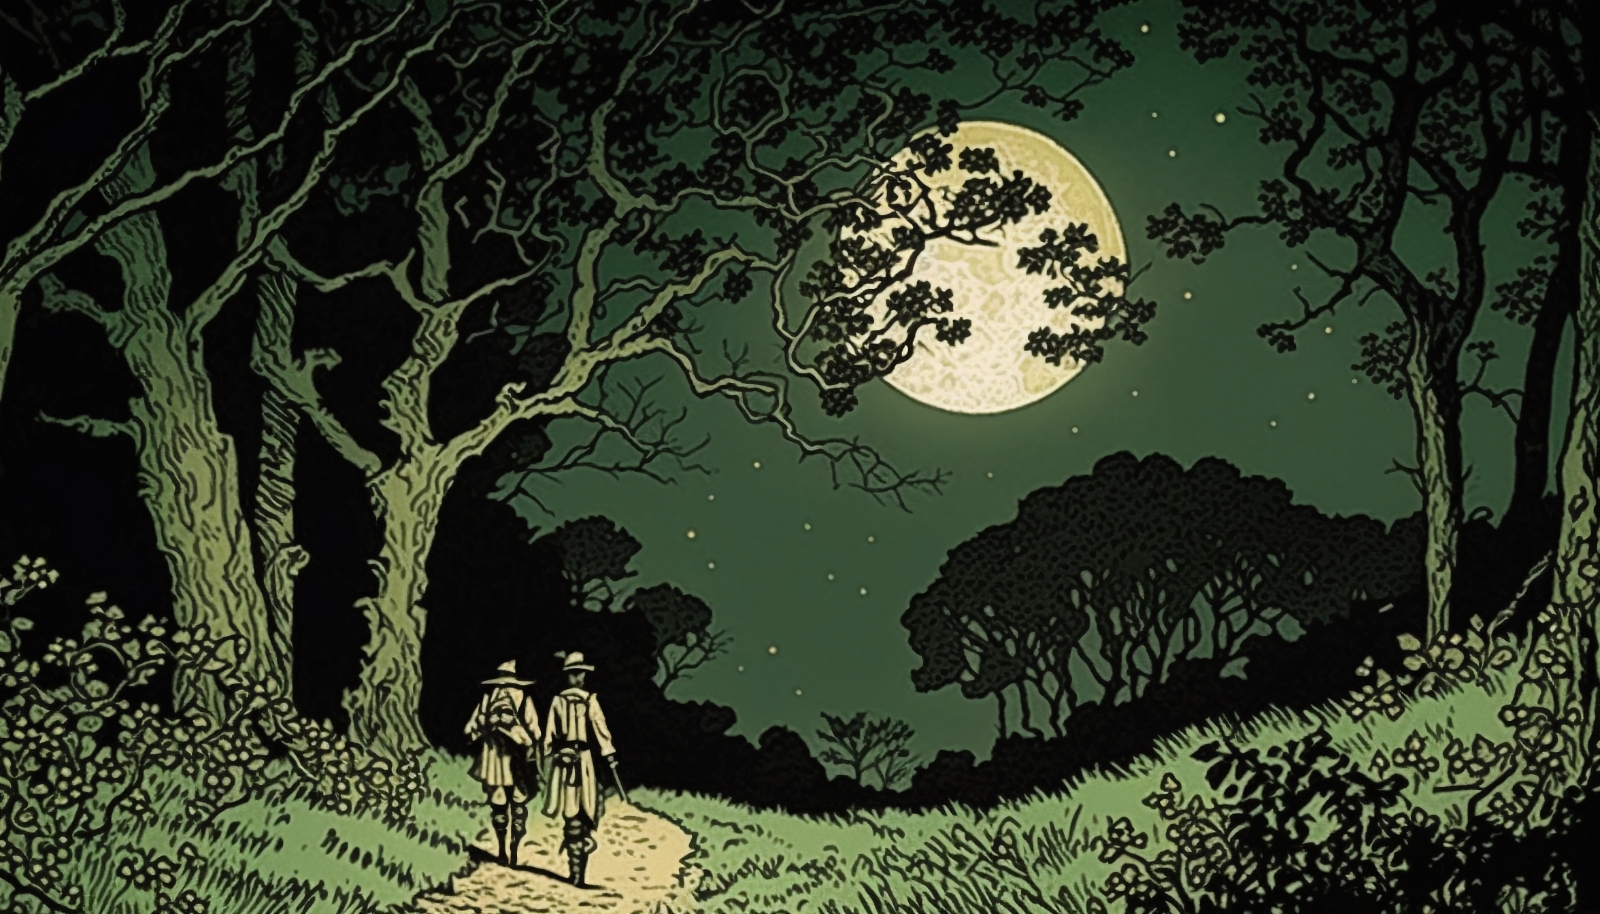 Robin Hood and Little John walking through the forest – MidJourney art